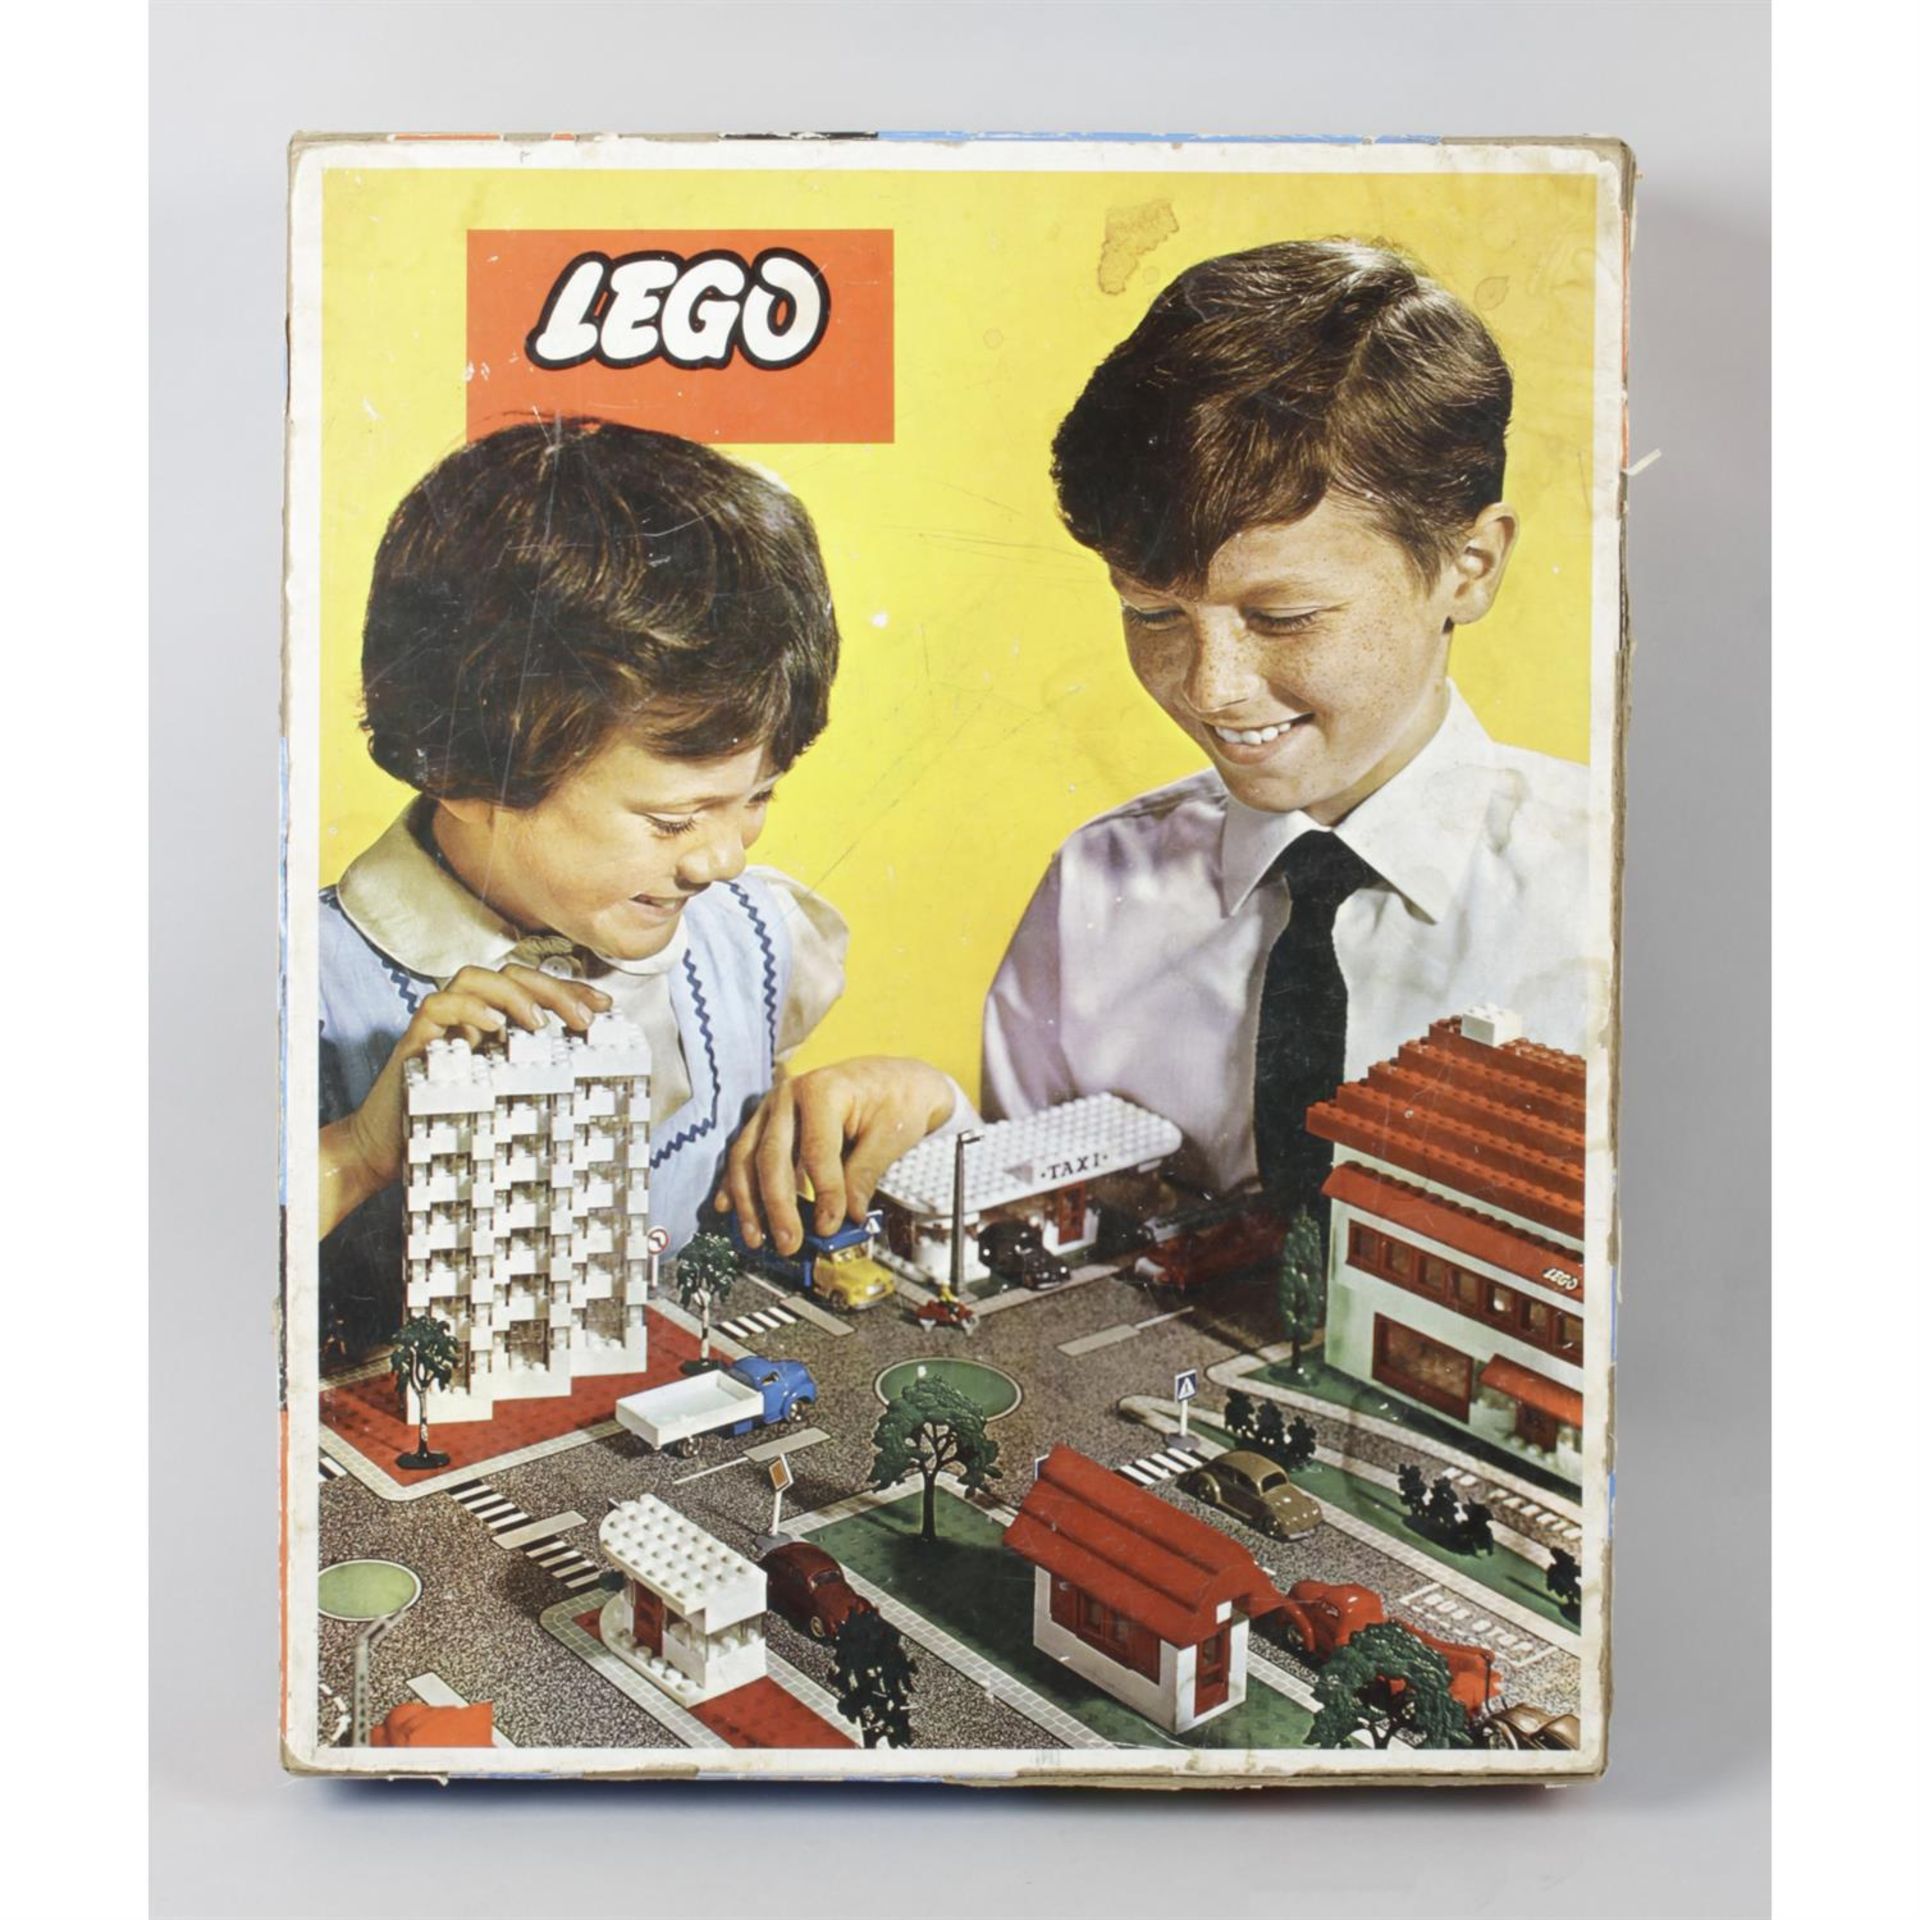 A Lego '810' plastic construction set in original box.